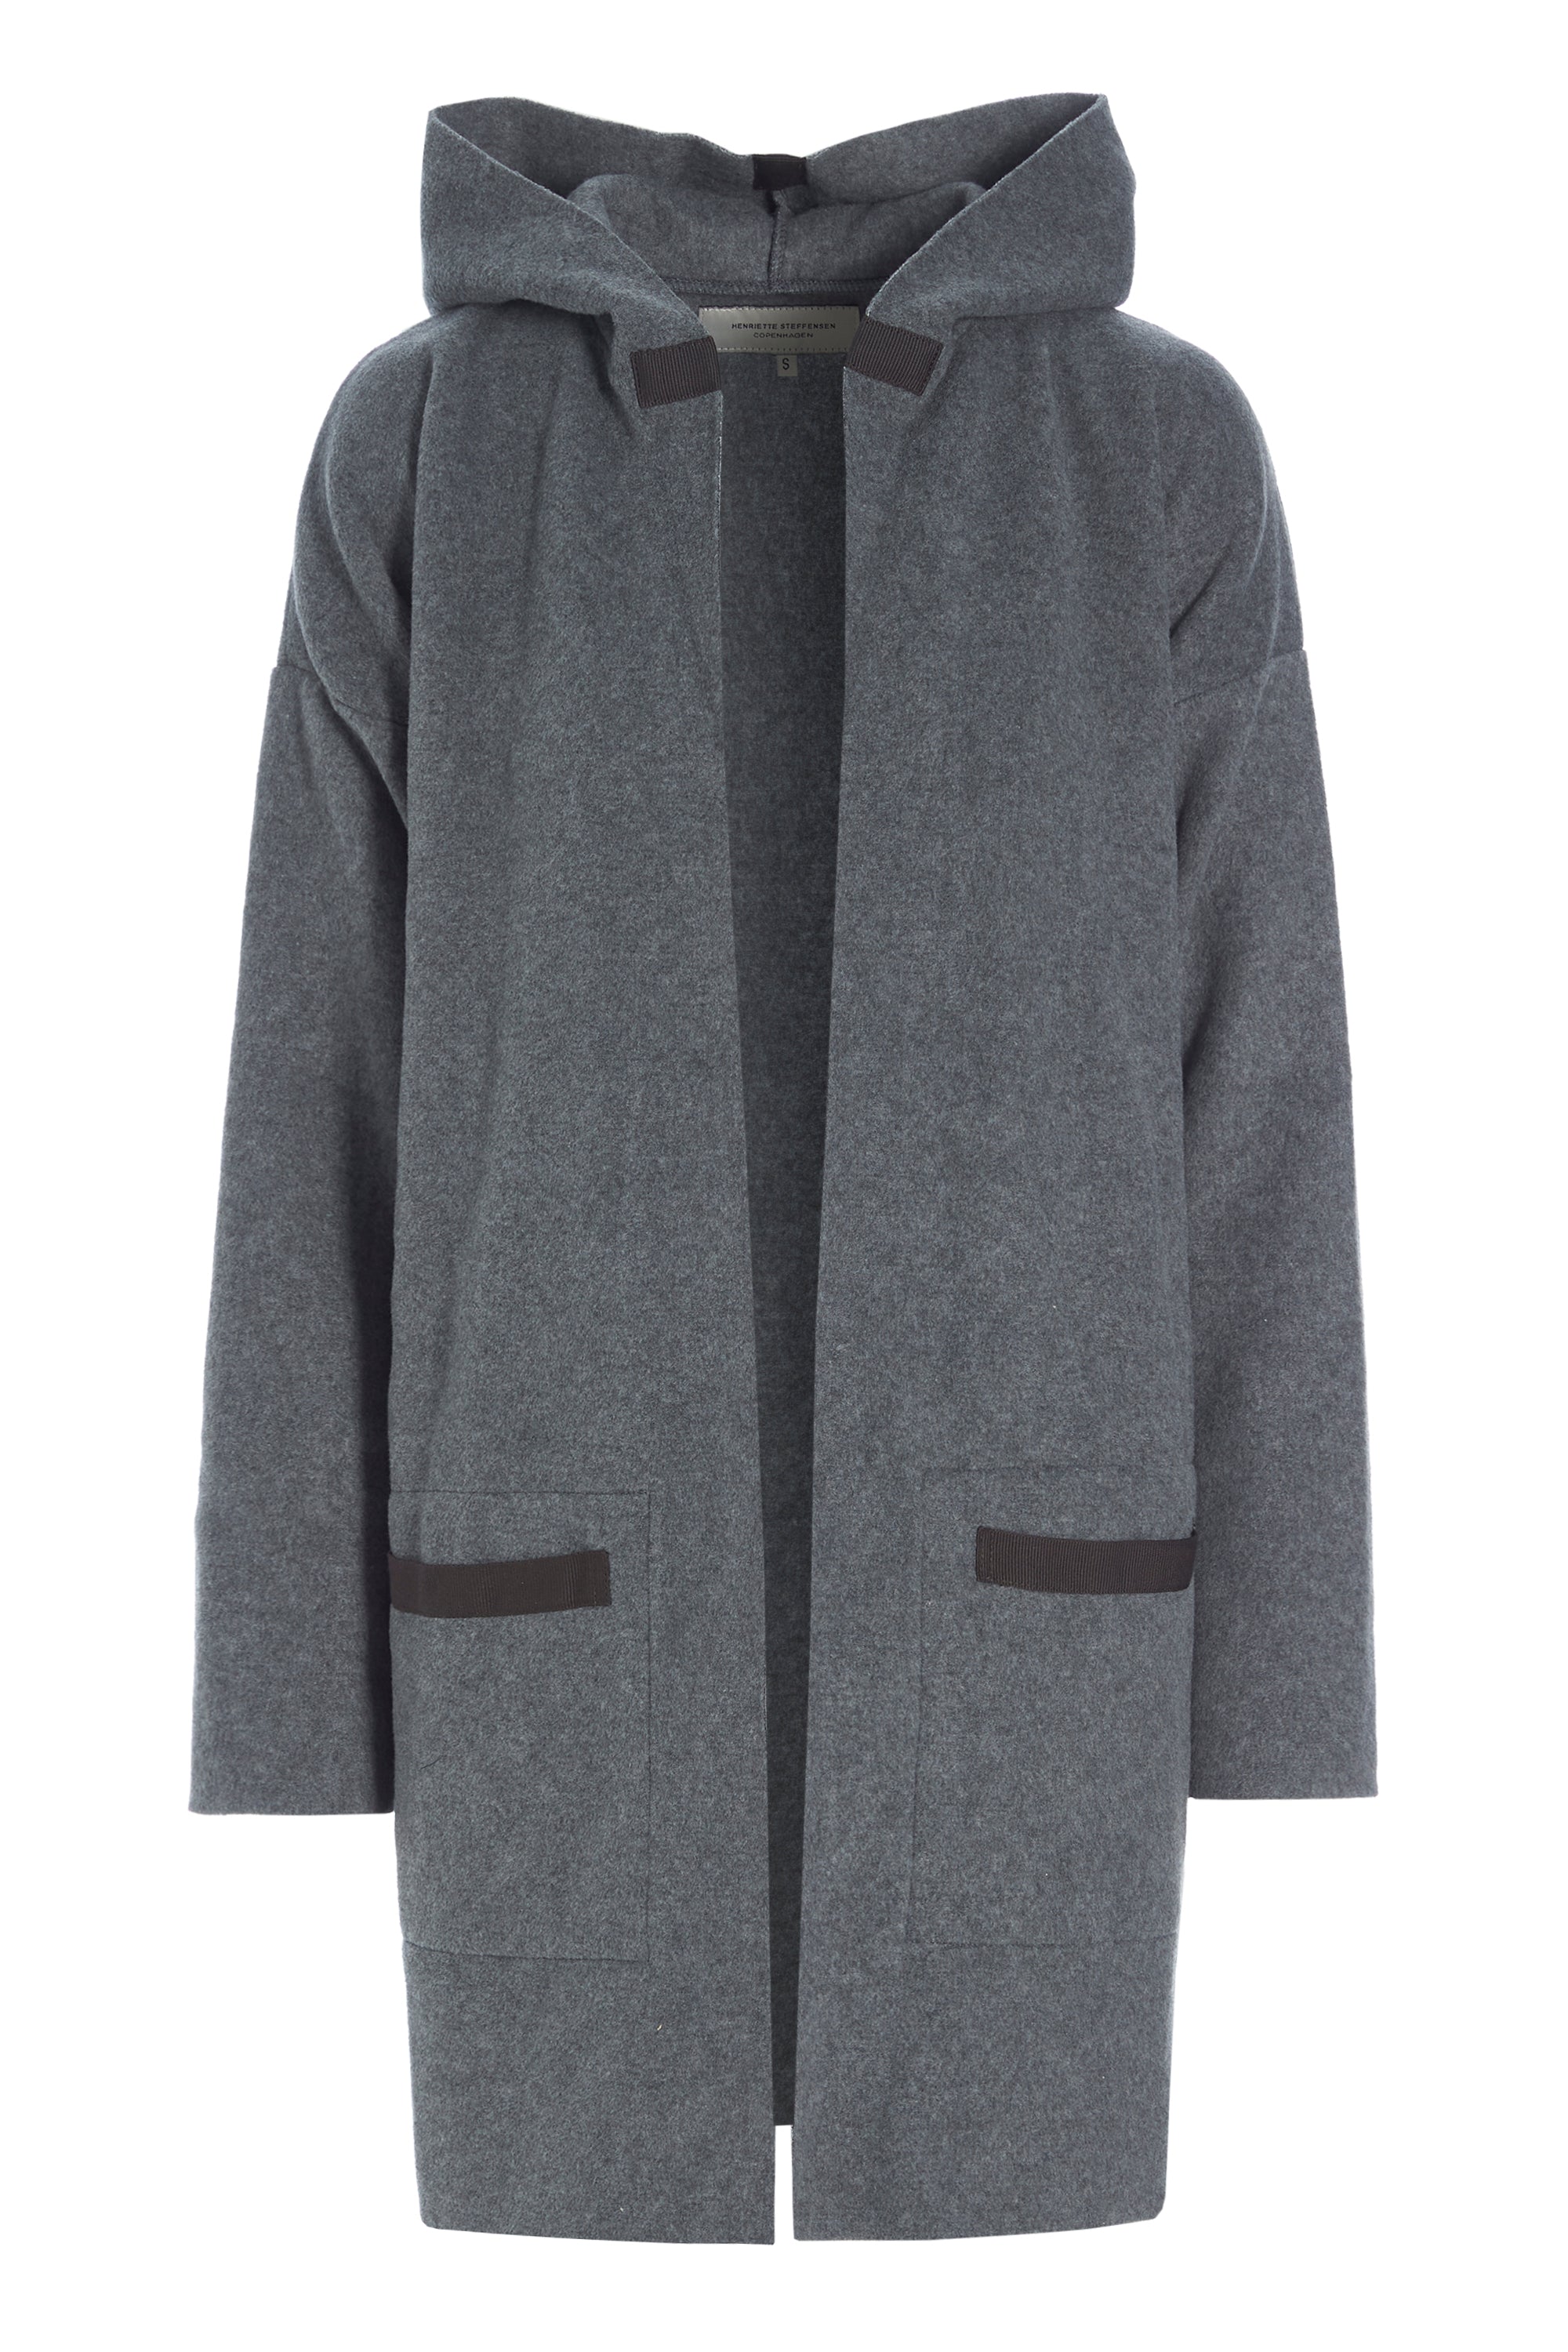 Henriette Steffensen Copenhagen Fleece Cardigan Sweater Long Gray Oeko-Tex  XS